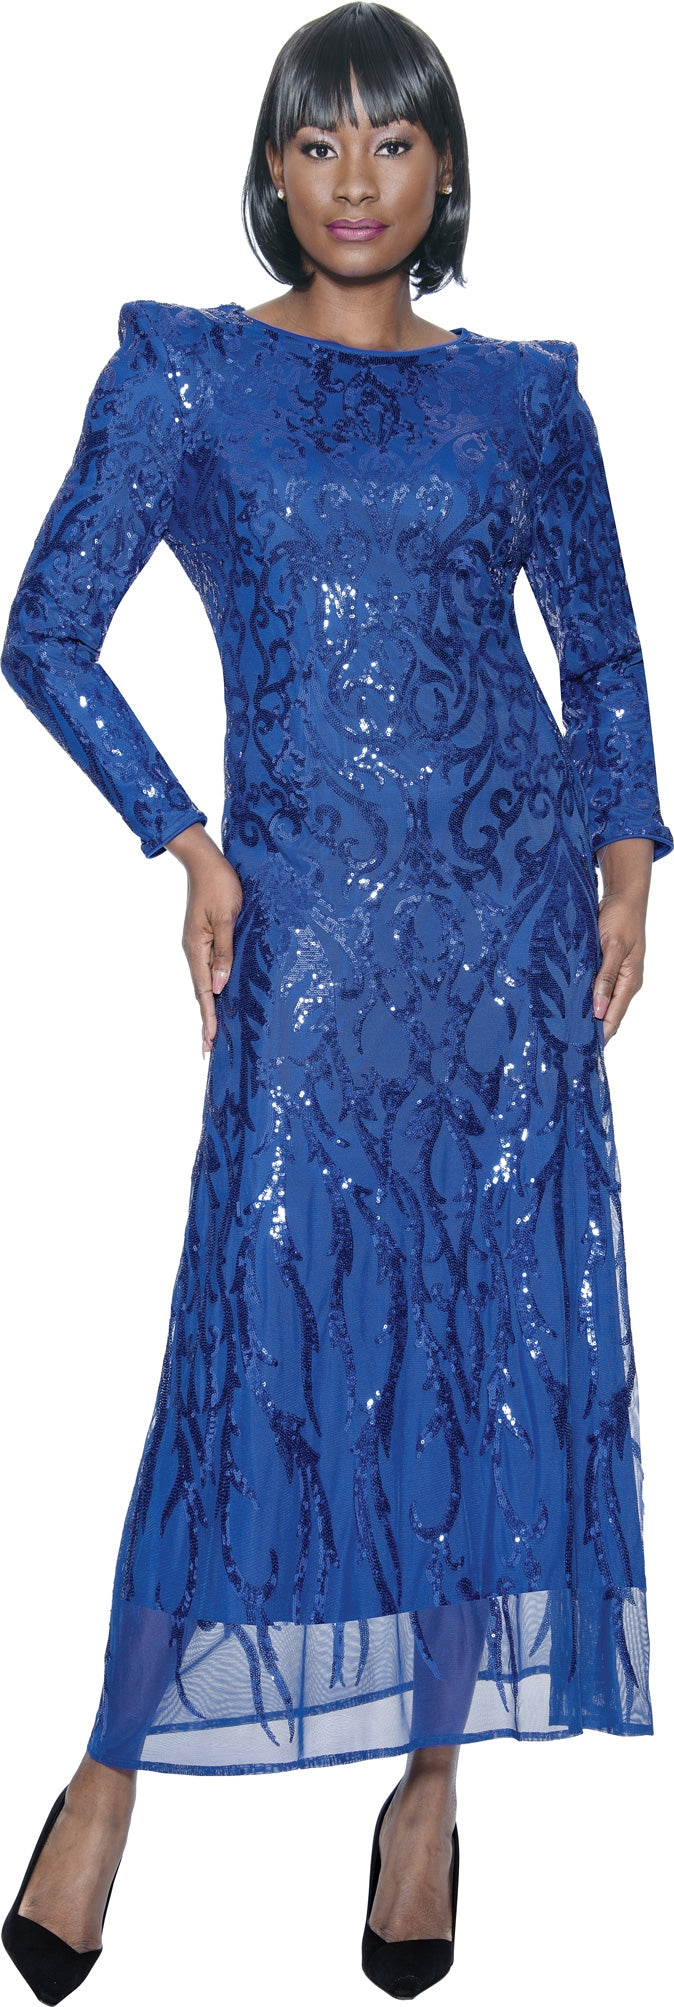 Terramina Dress 7100-Royal Blue - Church Suits For Less